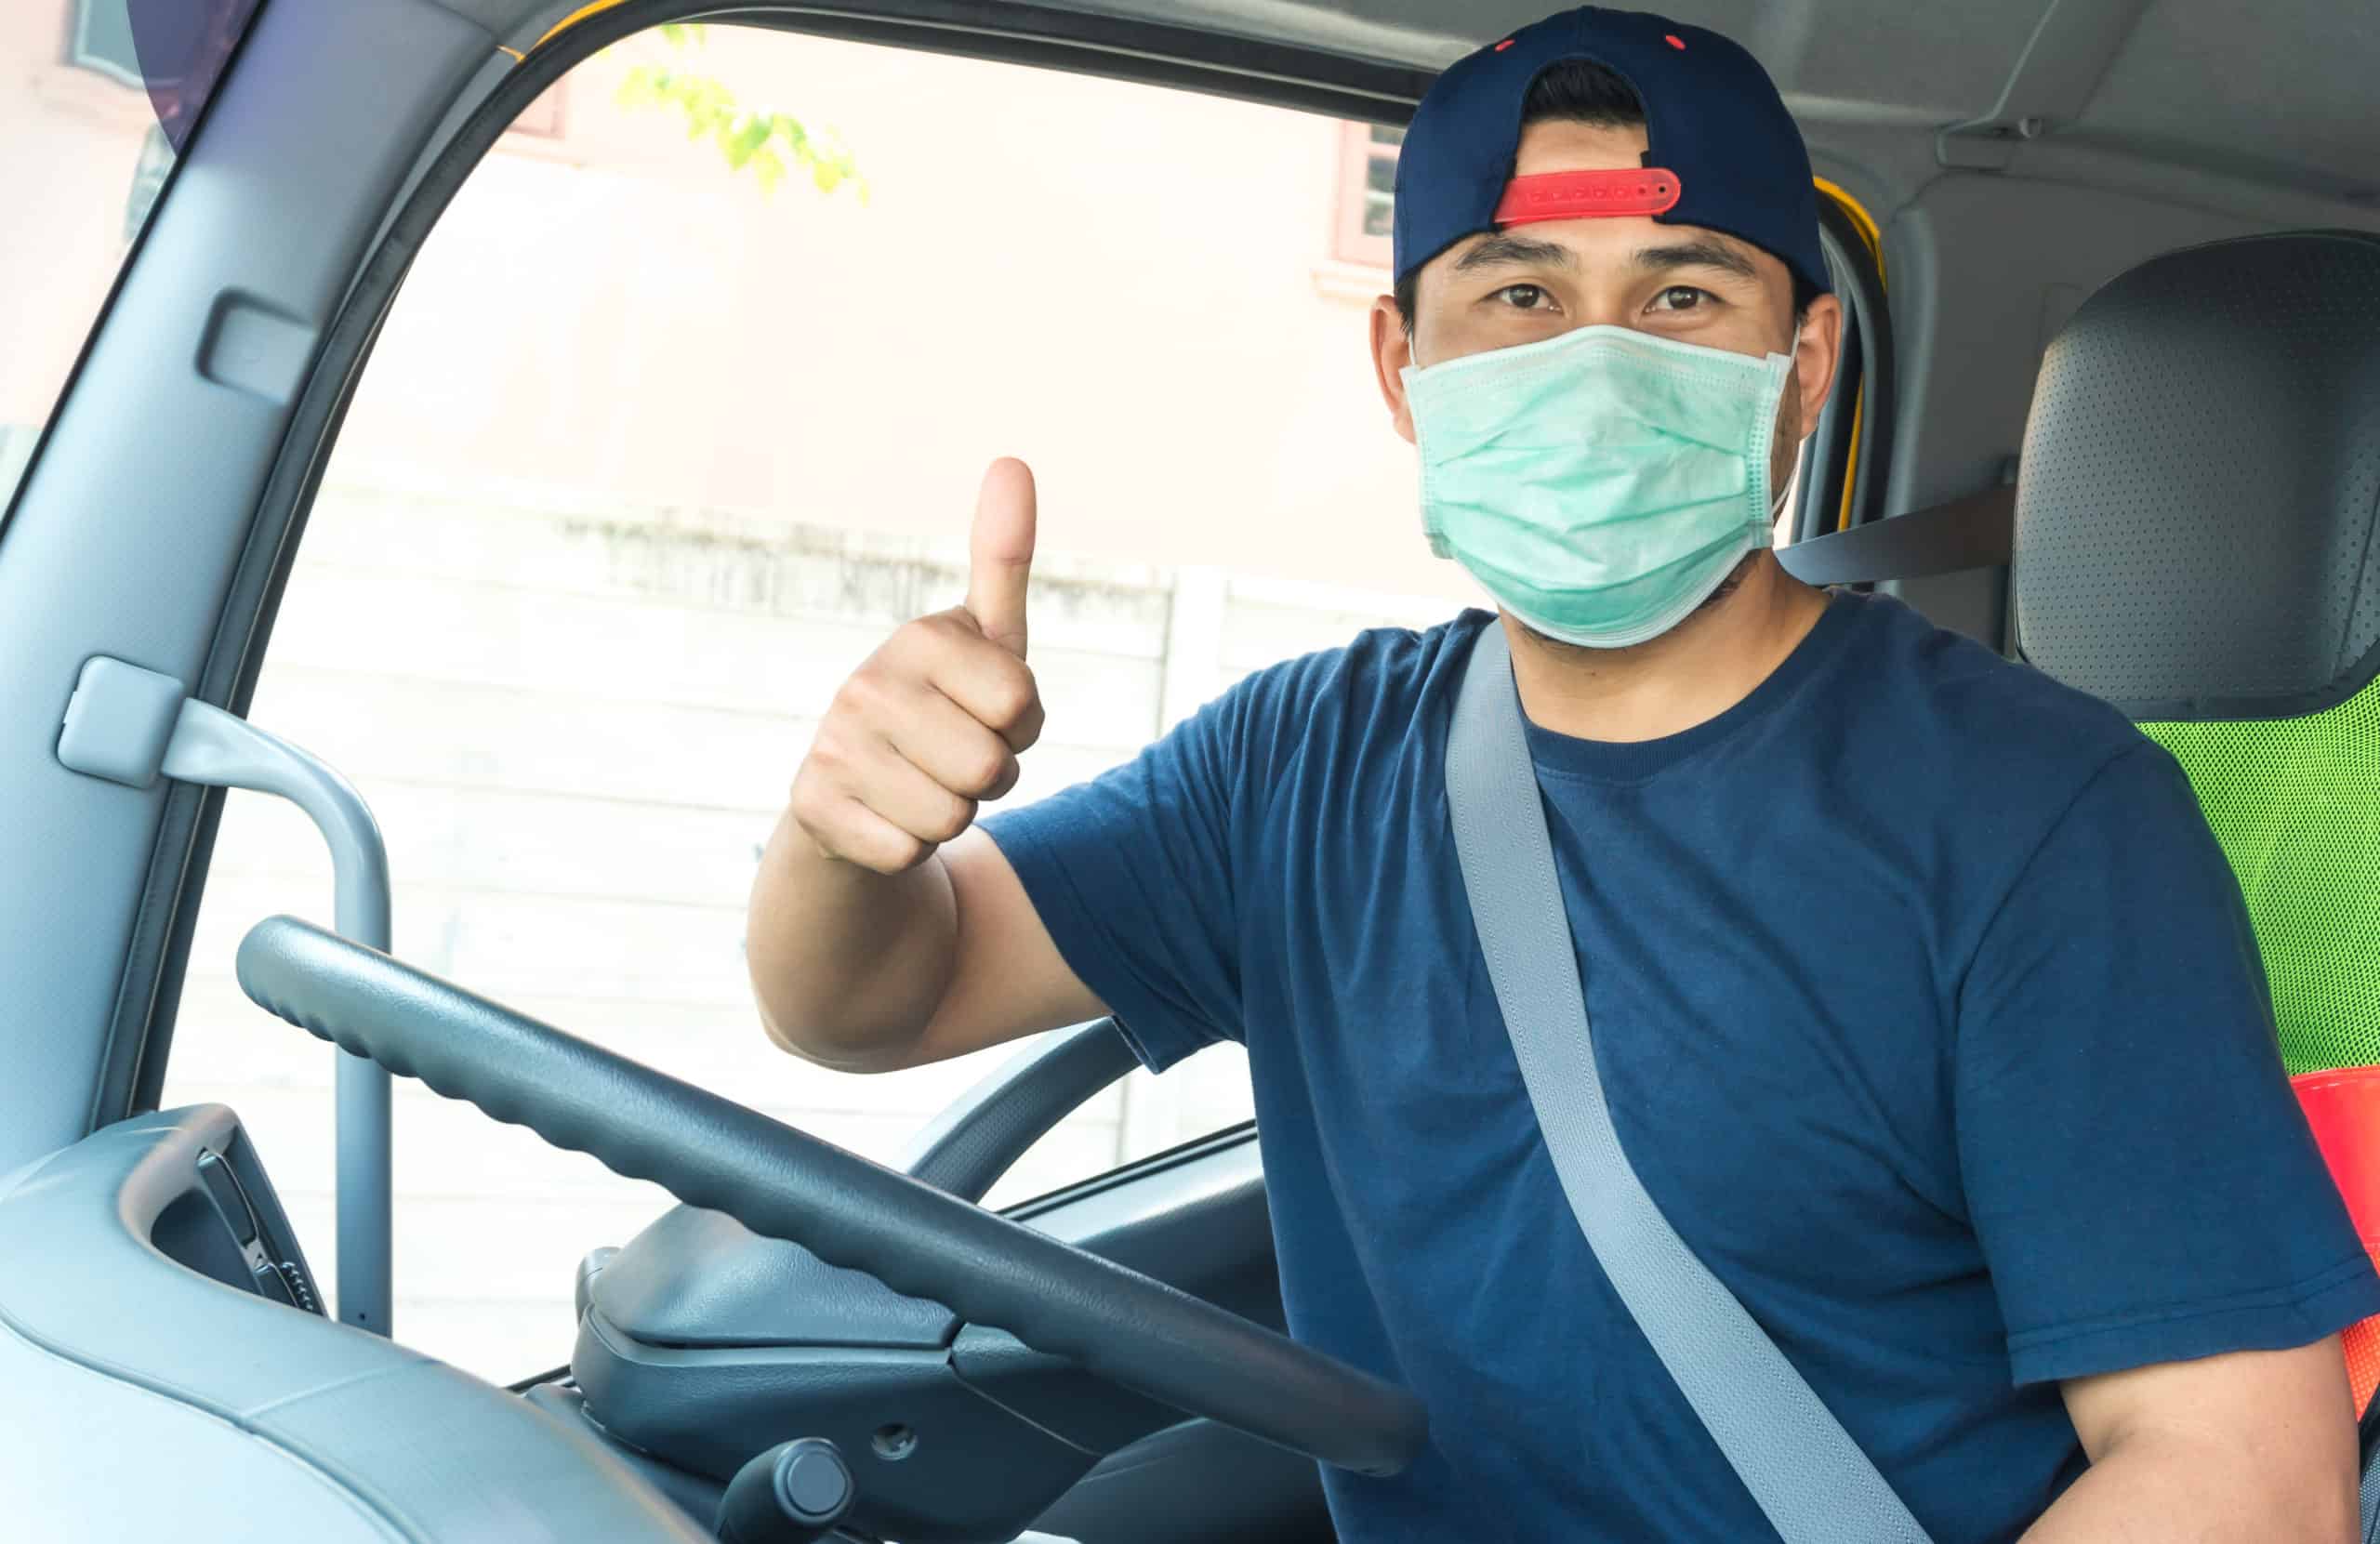 Trucker wearing mask for coronavirus protection